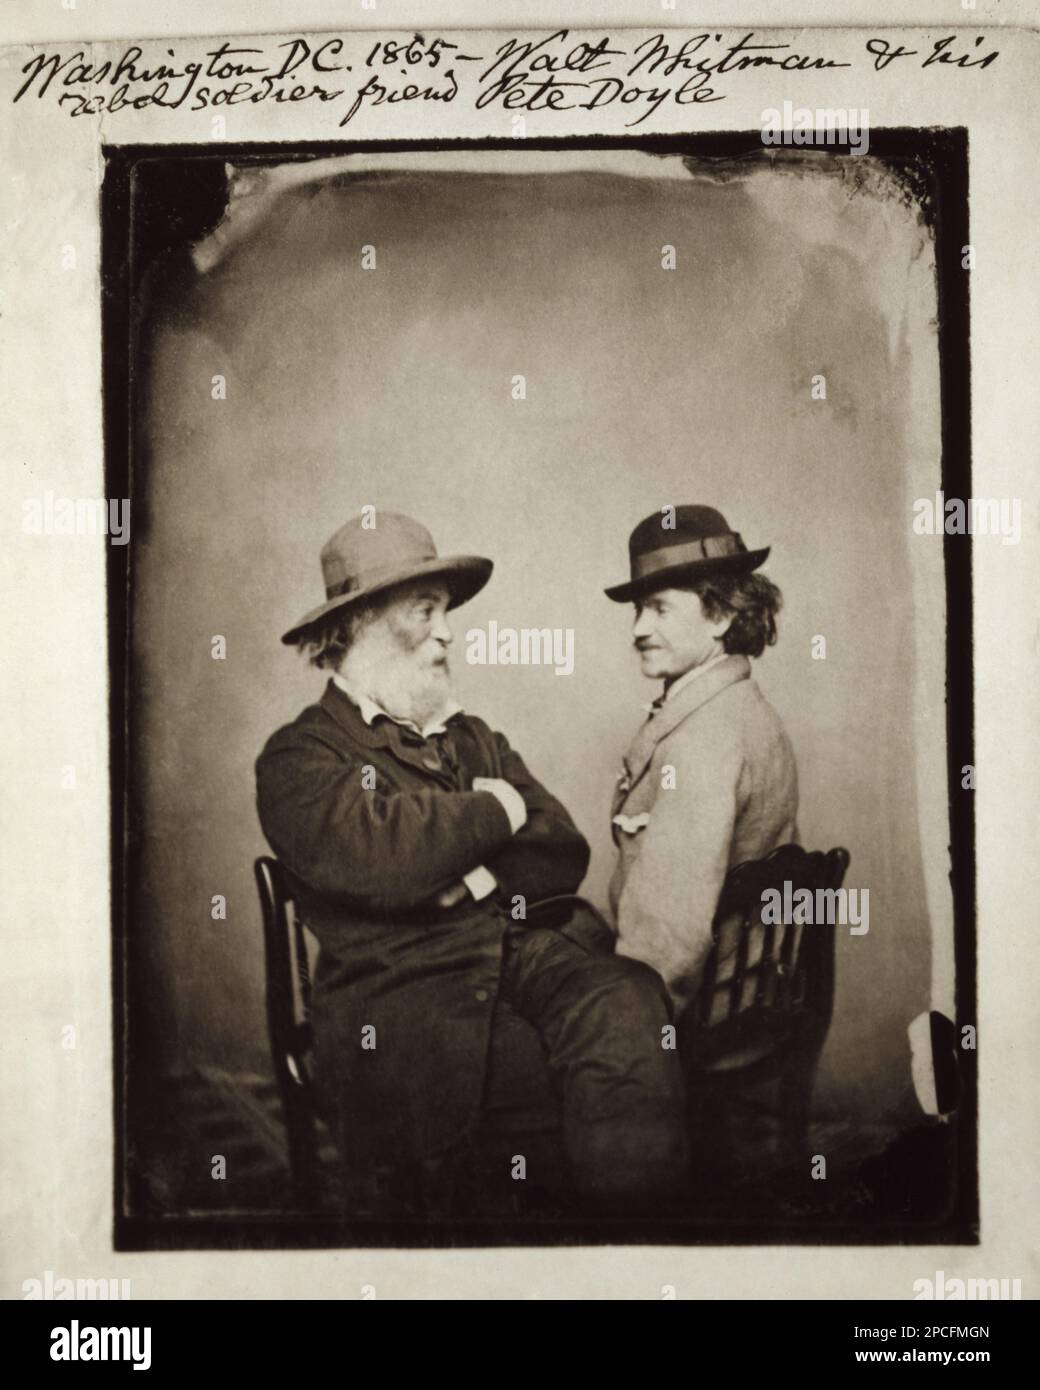 1865 , Washington DC , USA  : The most celebrated U.S.A. poet WALT WHITMAN ( 1819 - 1892 ) with his rebel soldier friend Pete Doyle - POESIA - POETA - POETRY - portrait - ritratto - hat - cappello - white bear - barba bianca - ancient older man - uomo anziano vecchio - LETTERATURA - LITERATURE - letterato - GAY - Homosexual - Homosexuality - Omosessualità - LGBT - Omosessuale - portrait - ritratto - PACIFIST - PACIFISTA - coppia - couple  -----  Archivio GBB Stock Photo